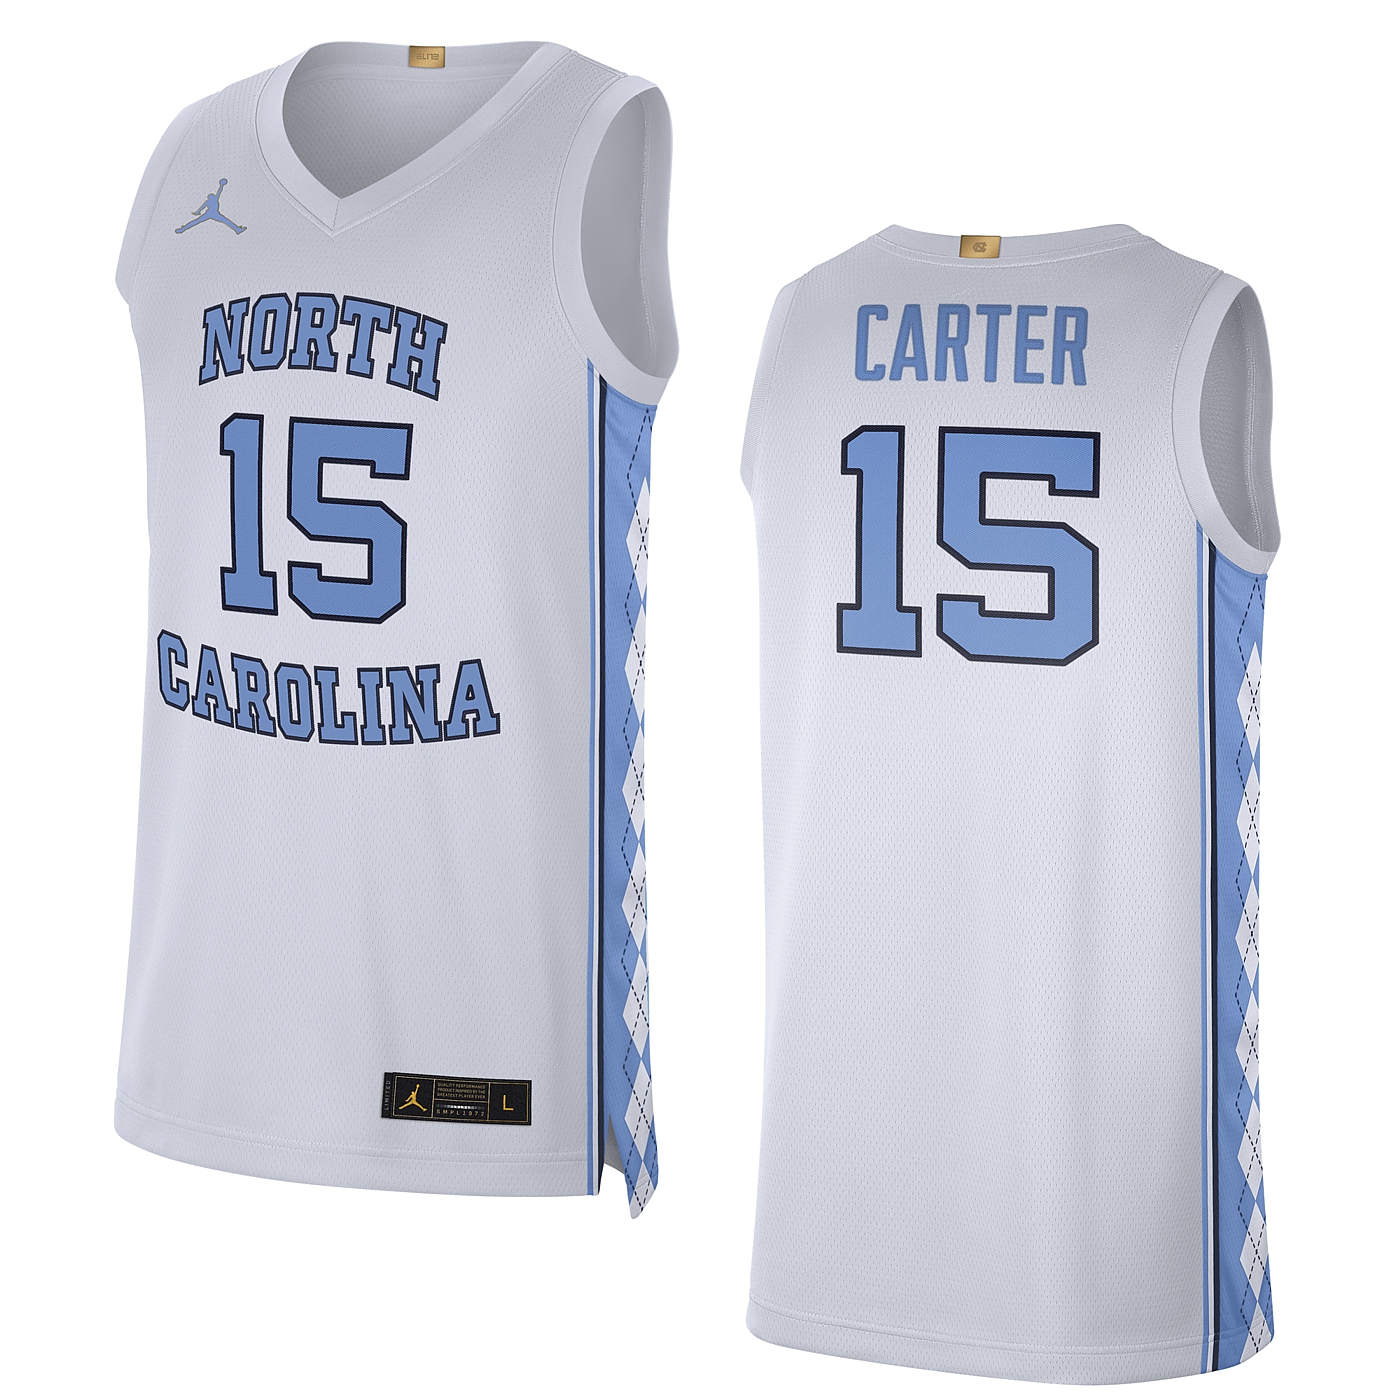 Vince Carter North Carolina jersey